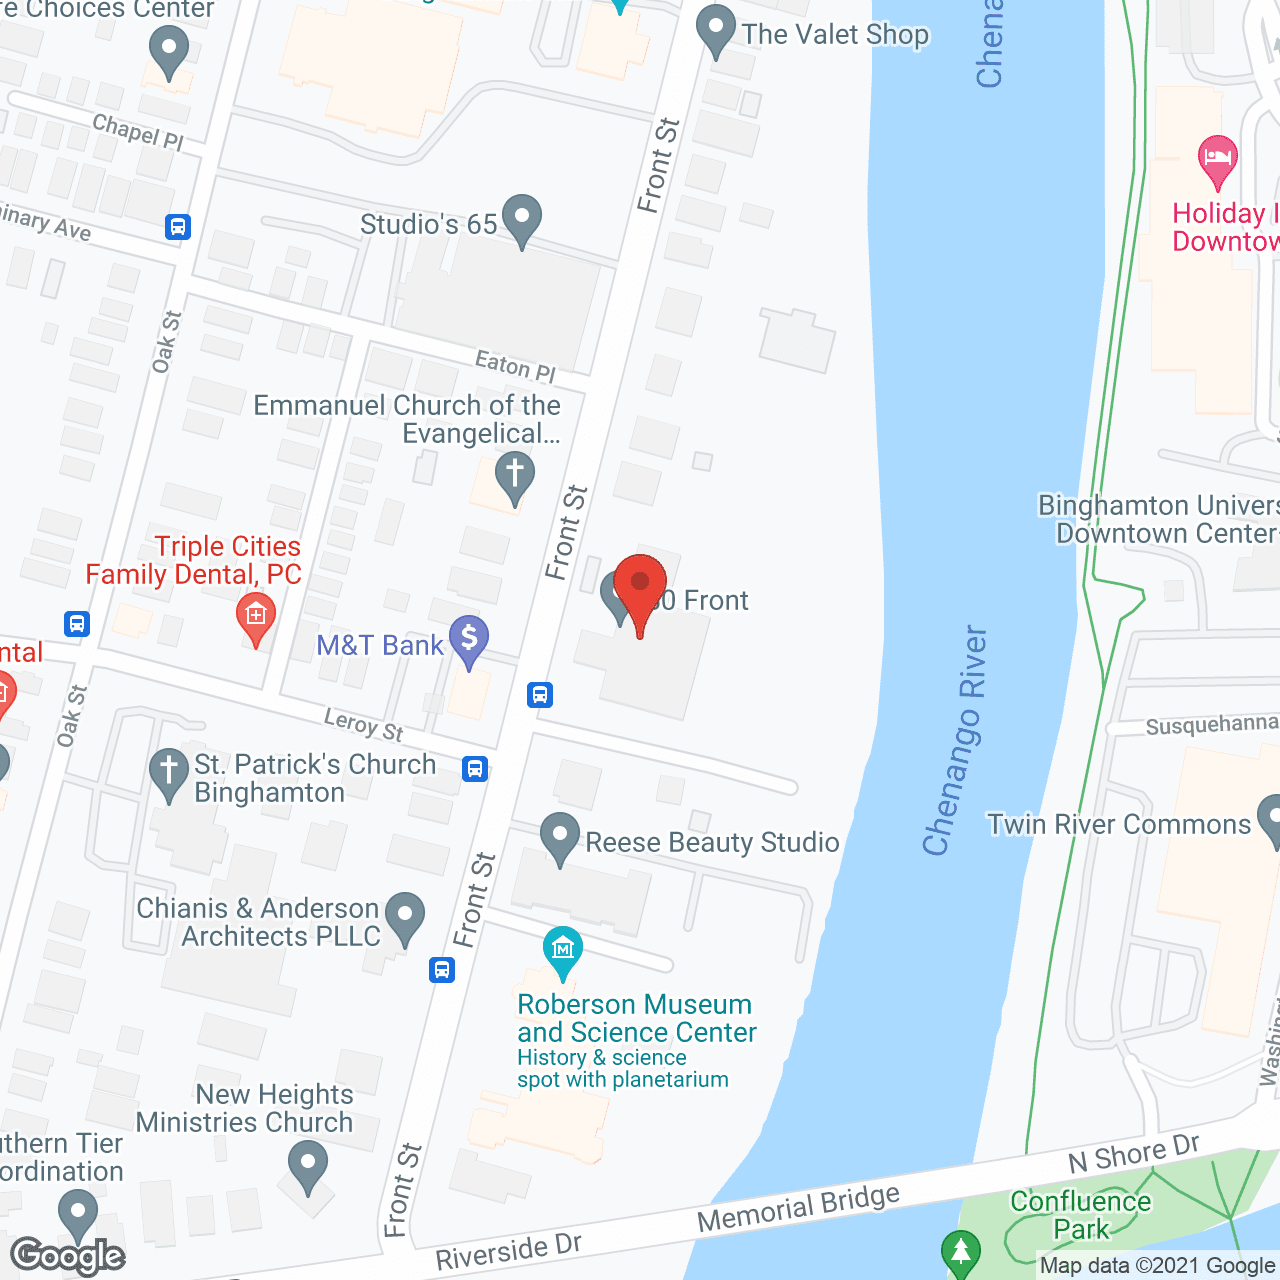 Renaissance Plaza, Ltd. in google map